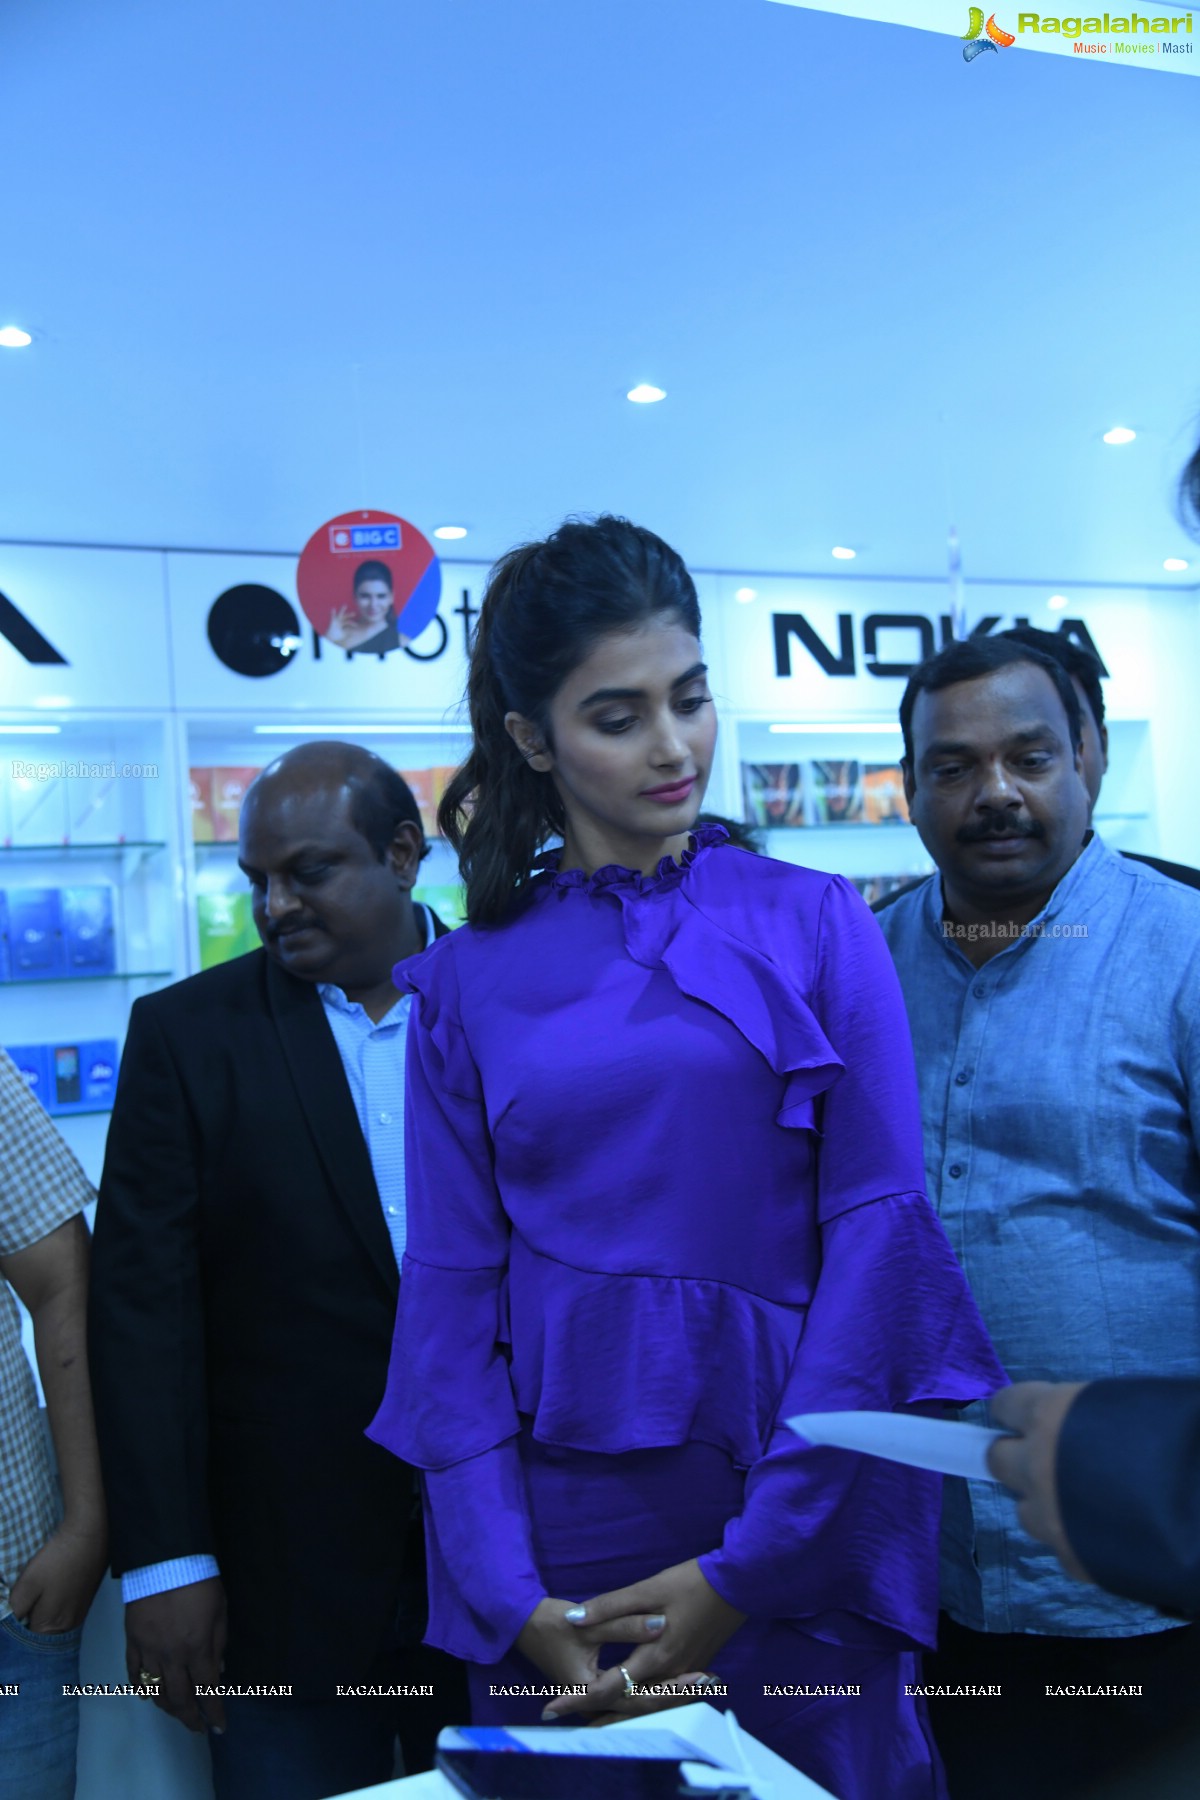 Pooja Hegde launches Samsung Galaxy Note 9 at Big C Store, Madhapur, Hyderabad